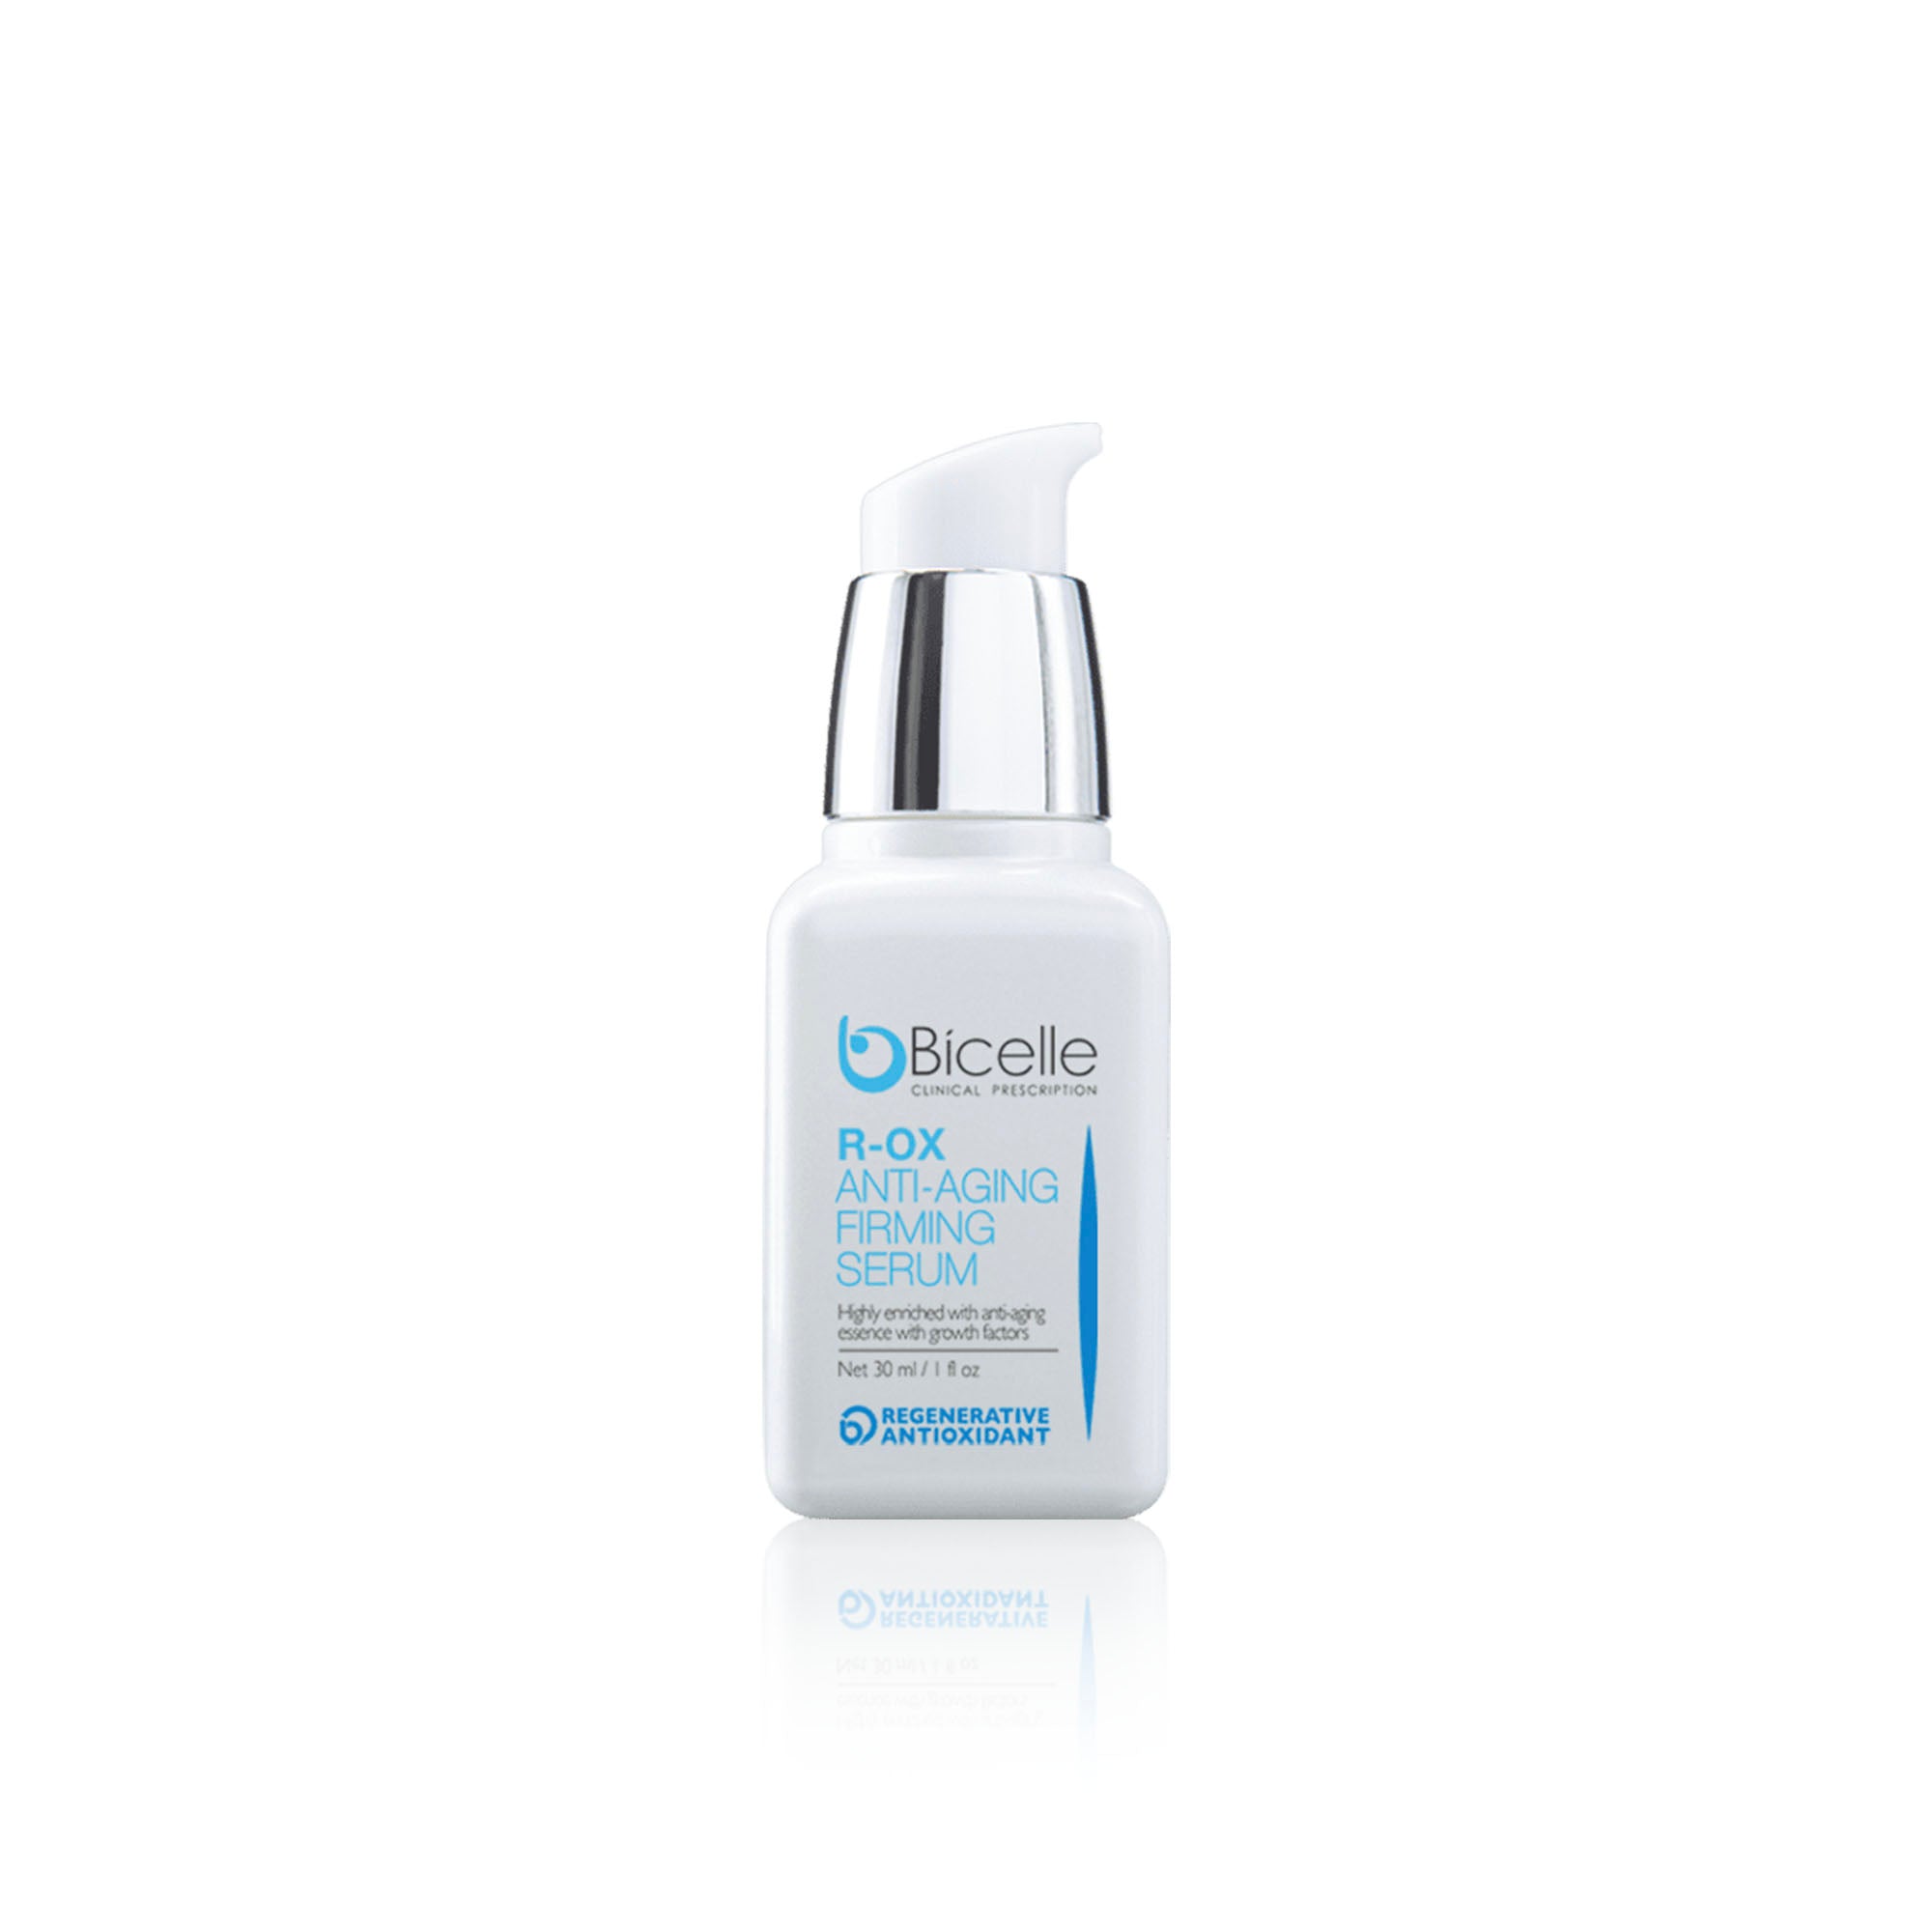 Bicelle R-OX Anti-Aging Firming Serum 30ml